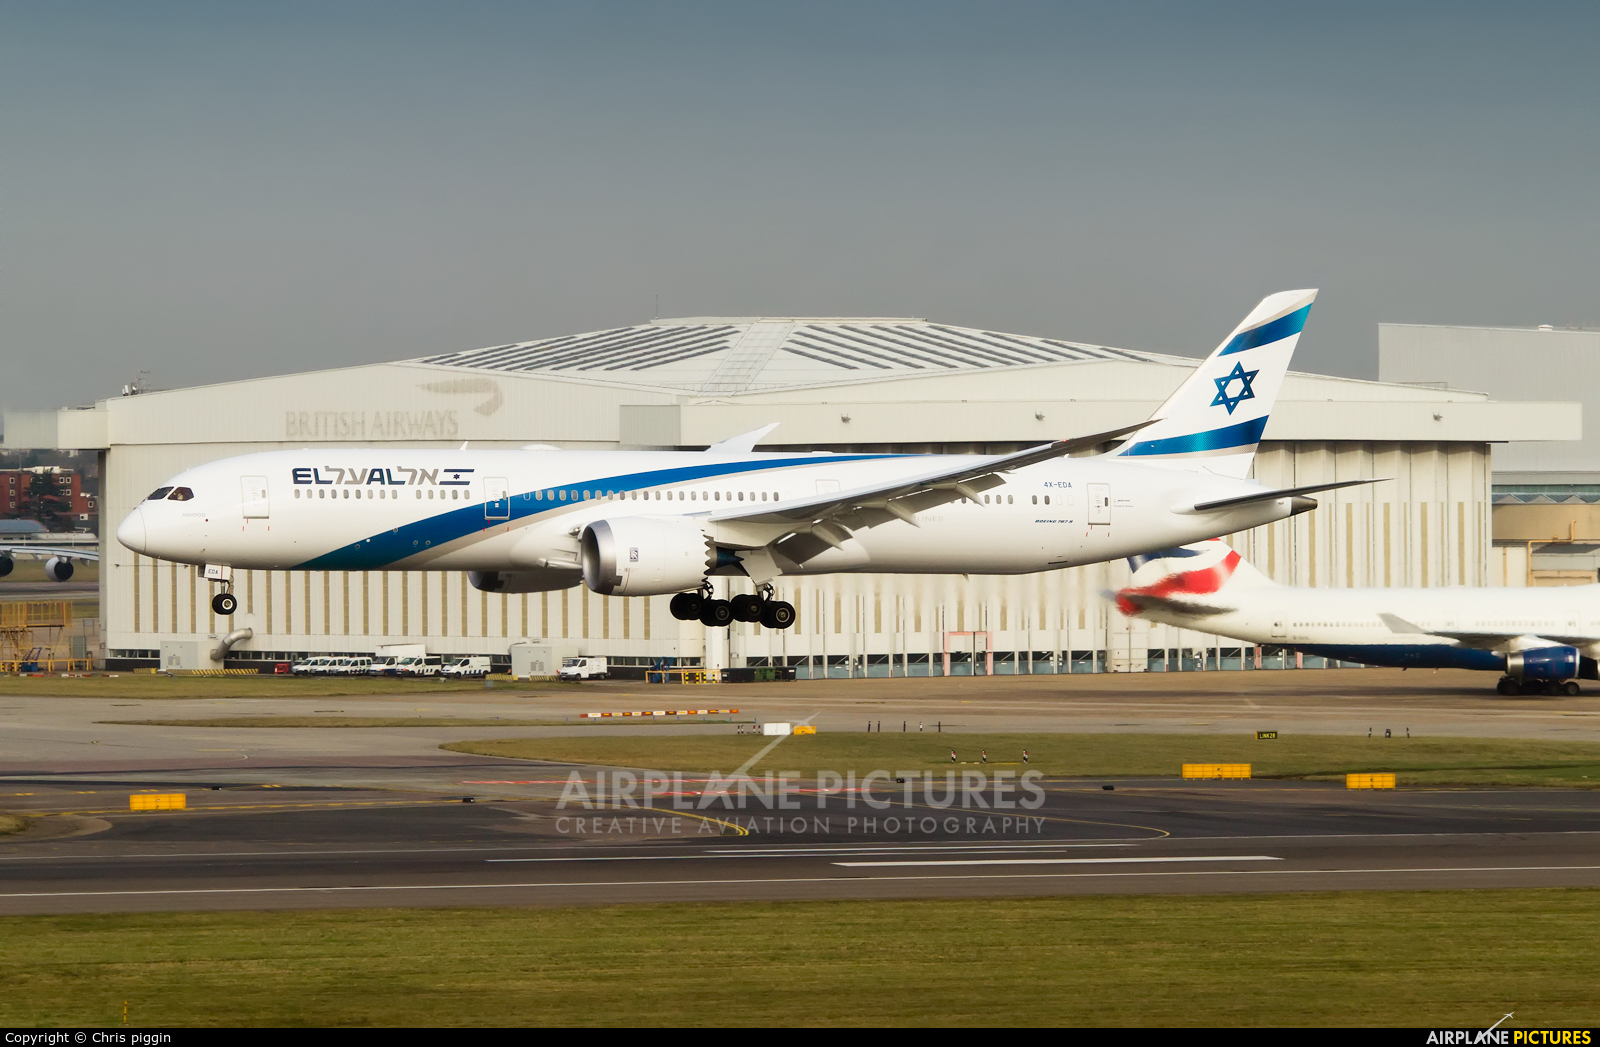 El Al Israel Airlines 4X-EDA aircraft at London - Heathrow